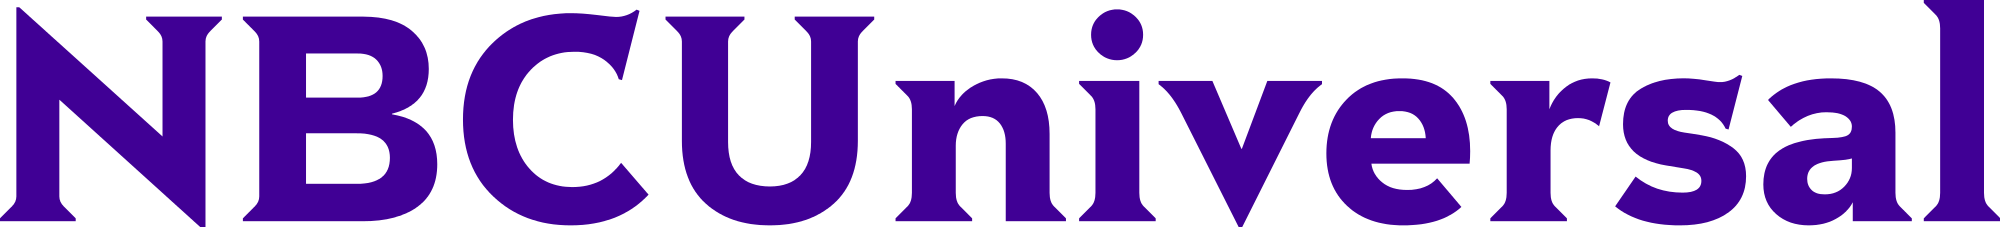 NBCUNI_Logo.svg.png